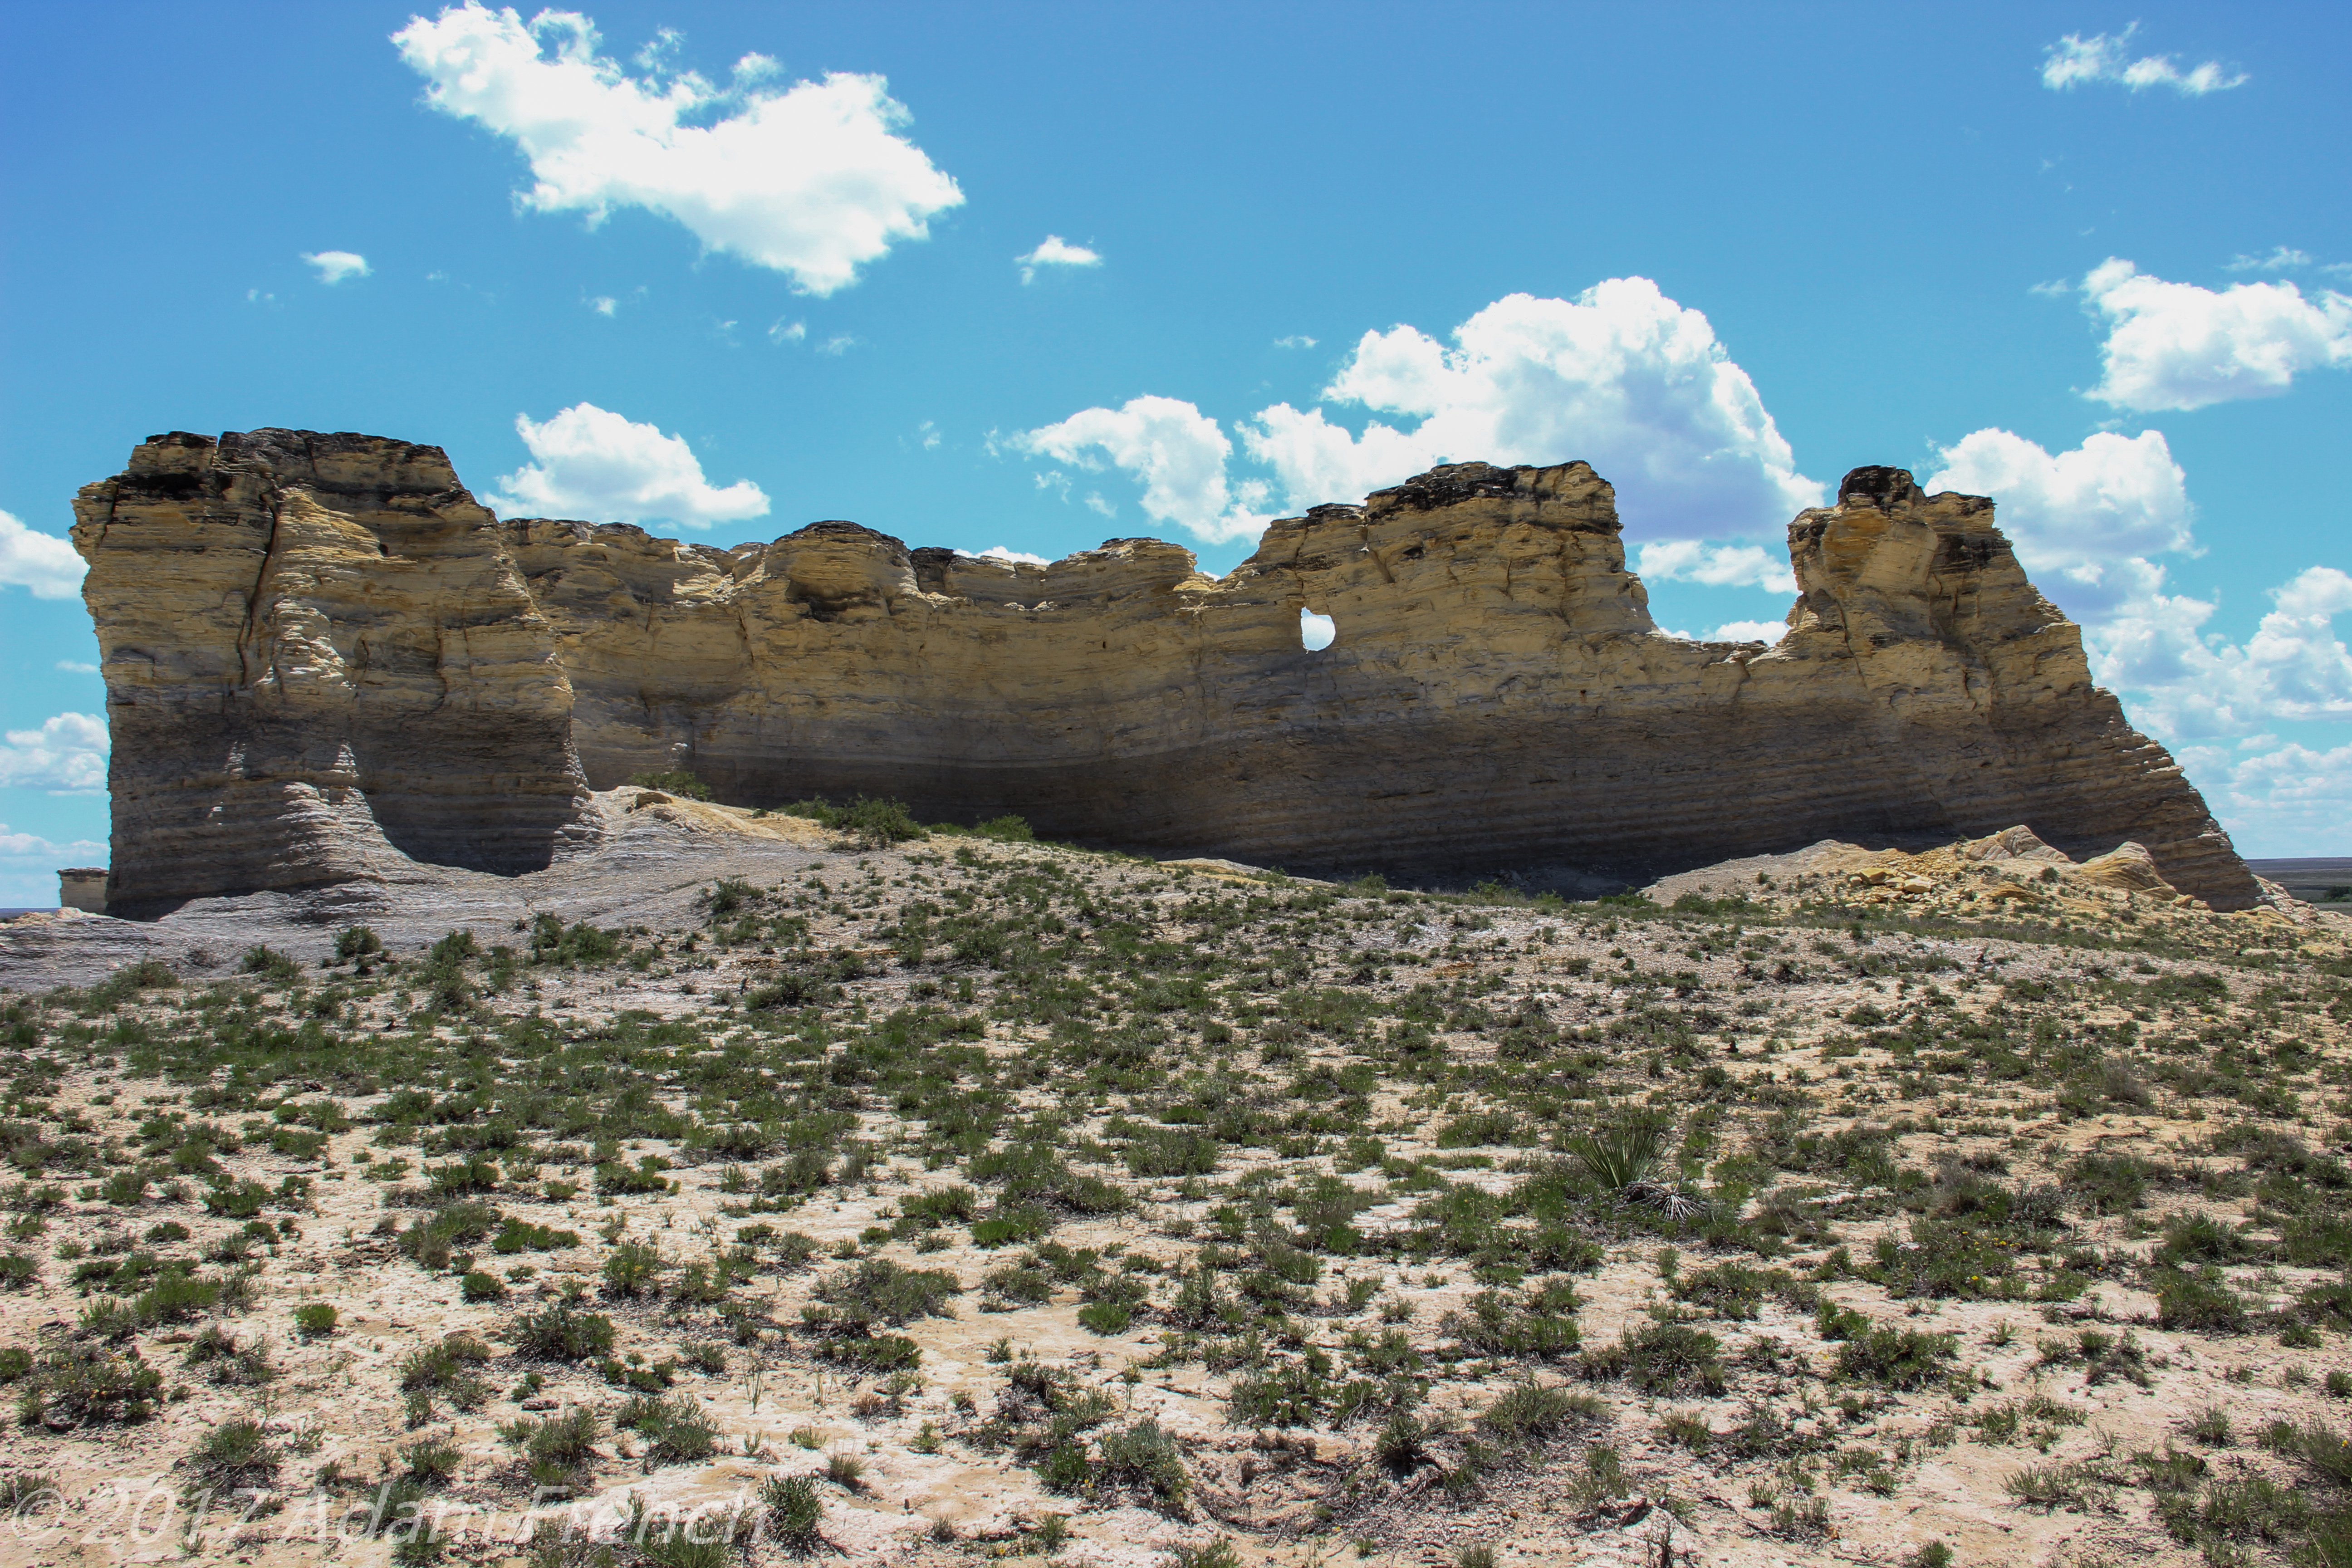 White, rock spires rise from the ground in sandy, desert-like scrubland